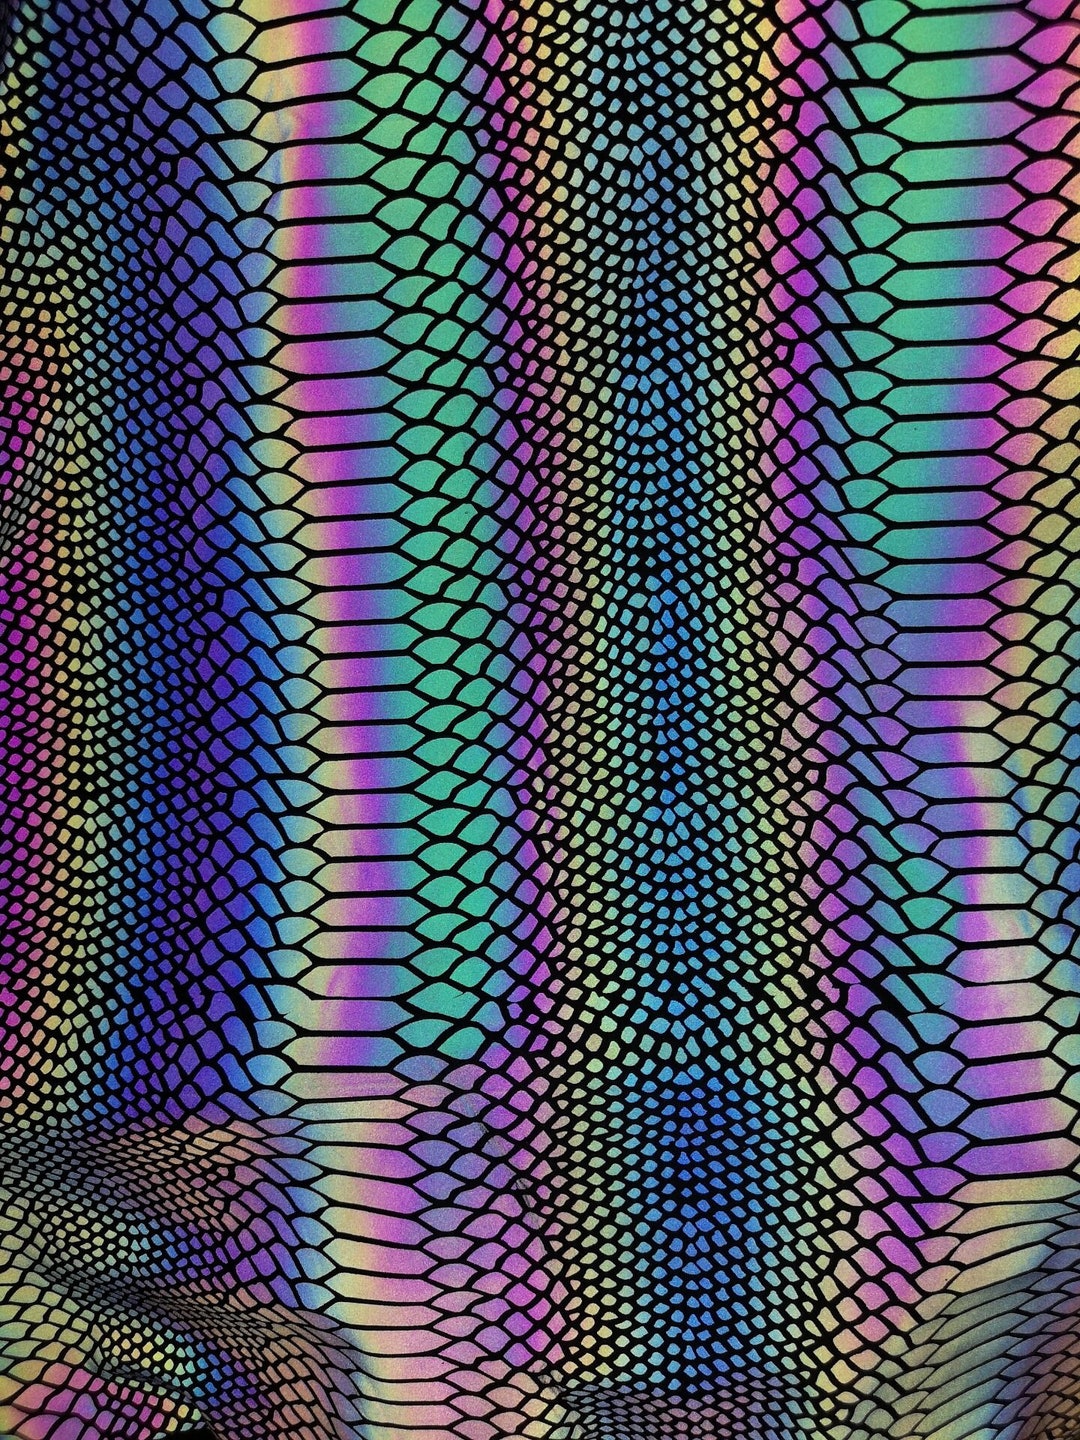 Iridescent Reflective STRETCH Fabric